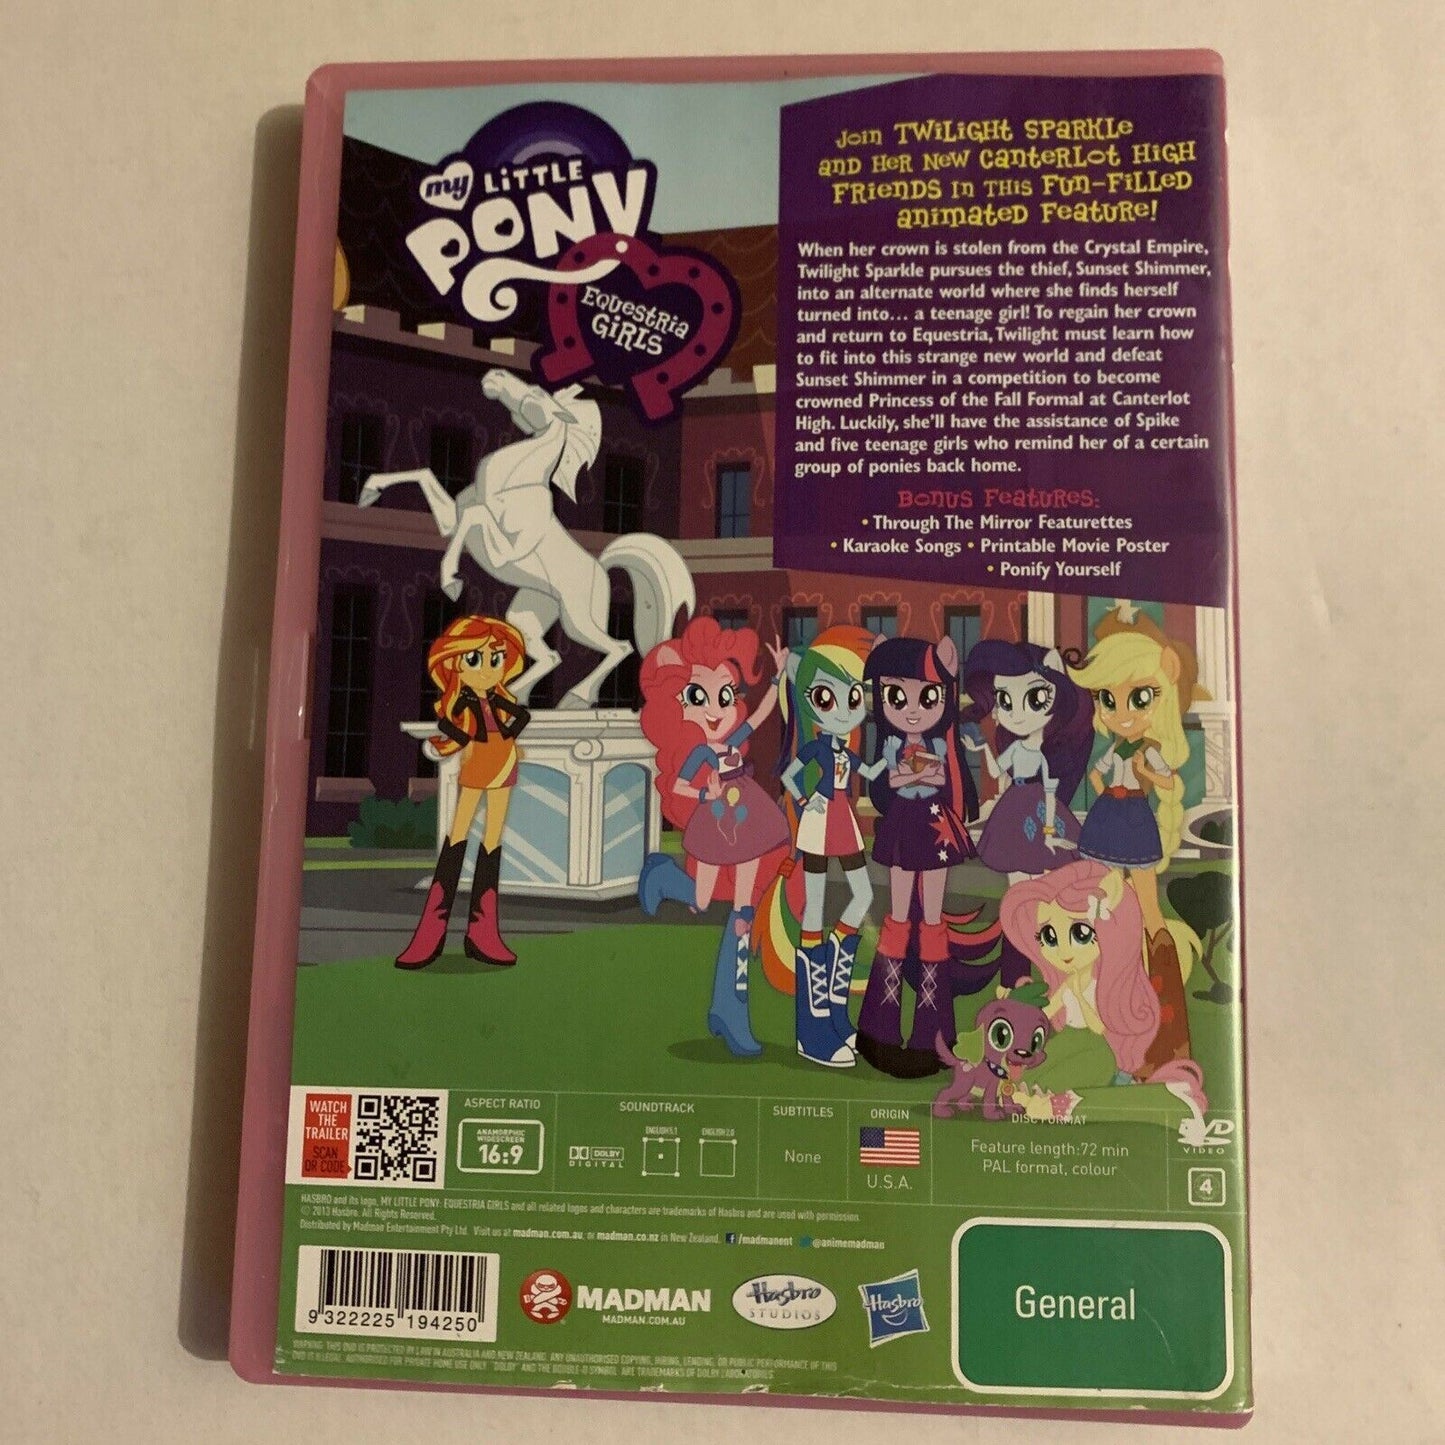 My Little Pony - Equestria Girls (DVD, 2013) Region 4